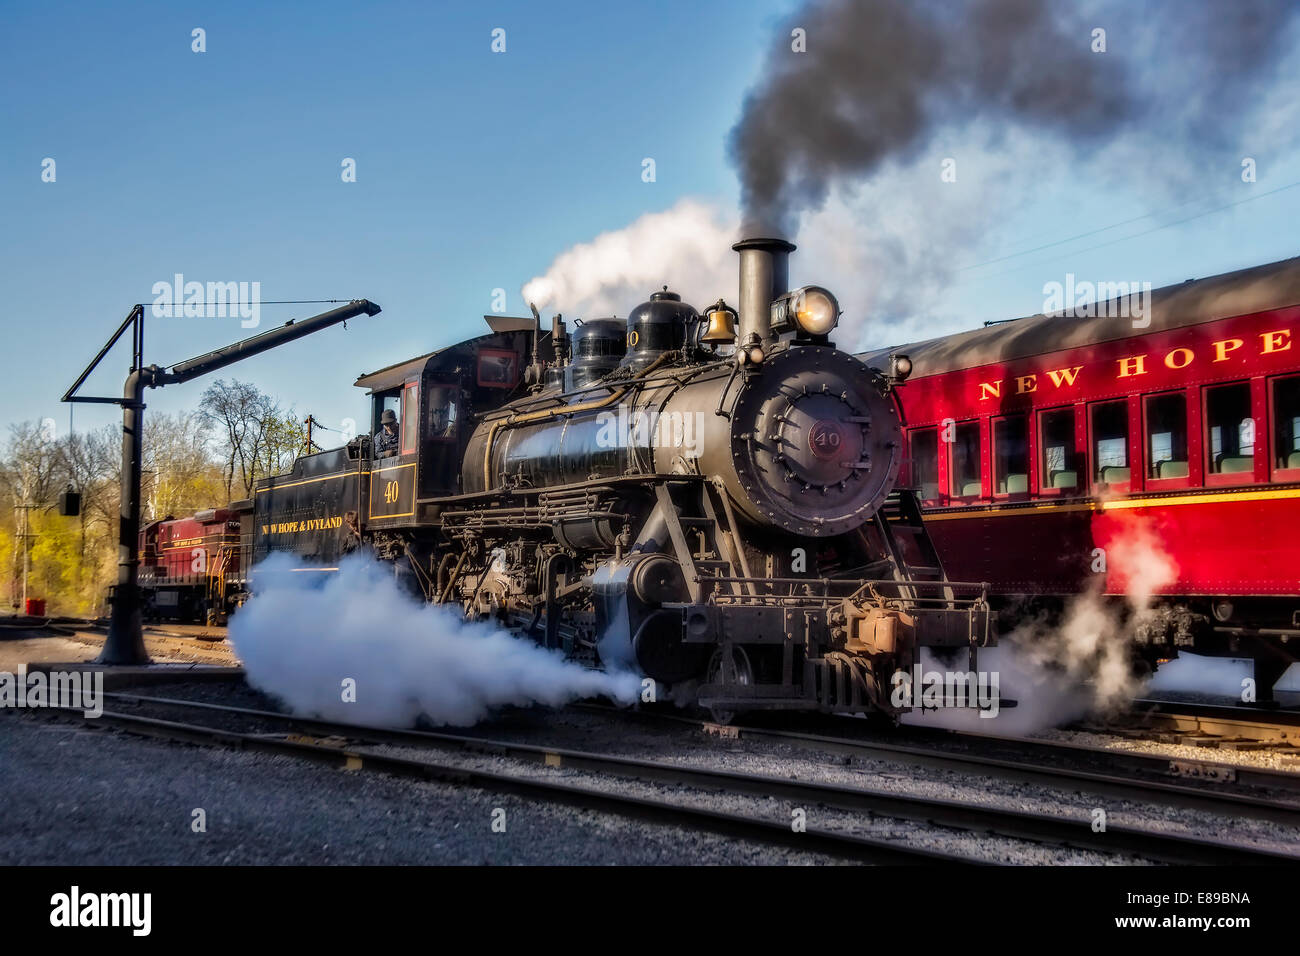 Antike Steam Train in New Hope, Pennsylvania Bahnhof. Stockfoto